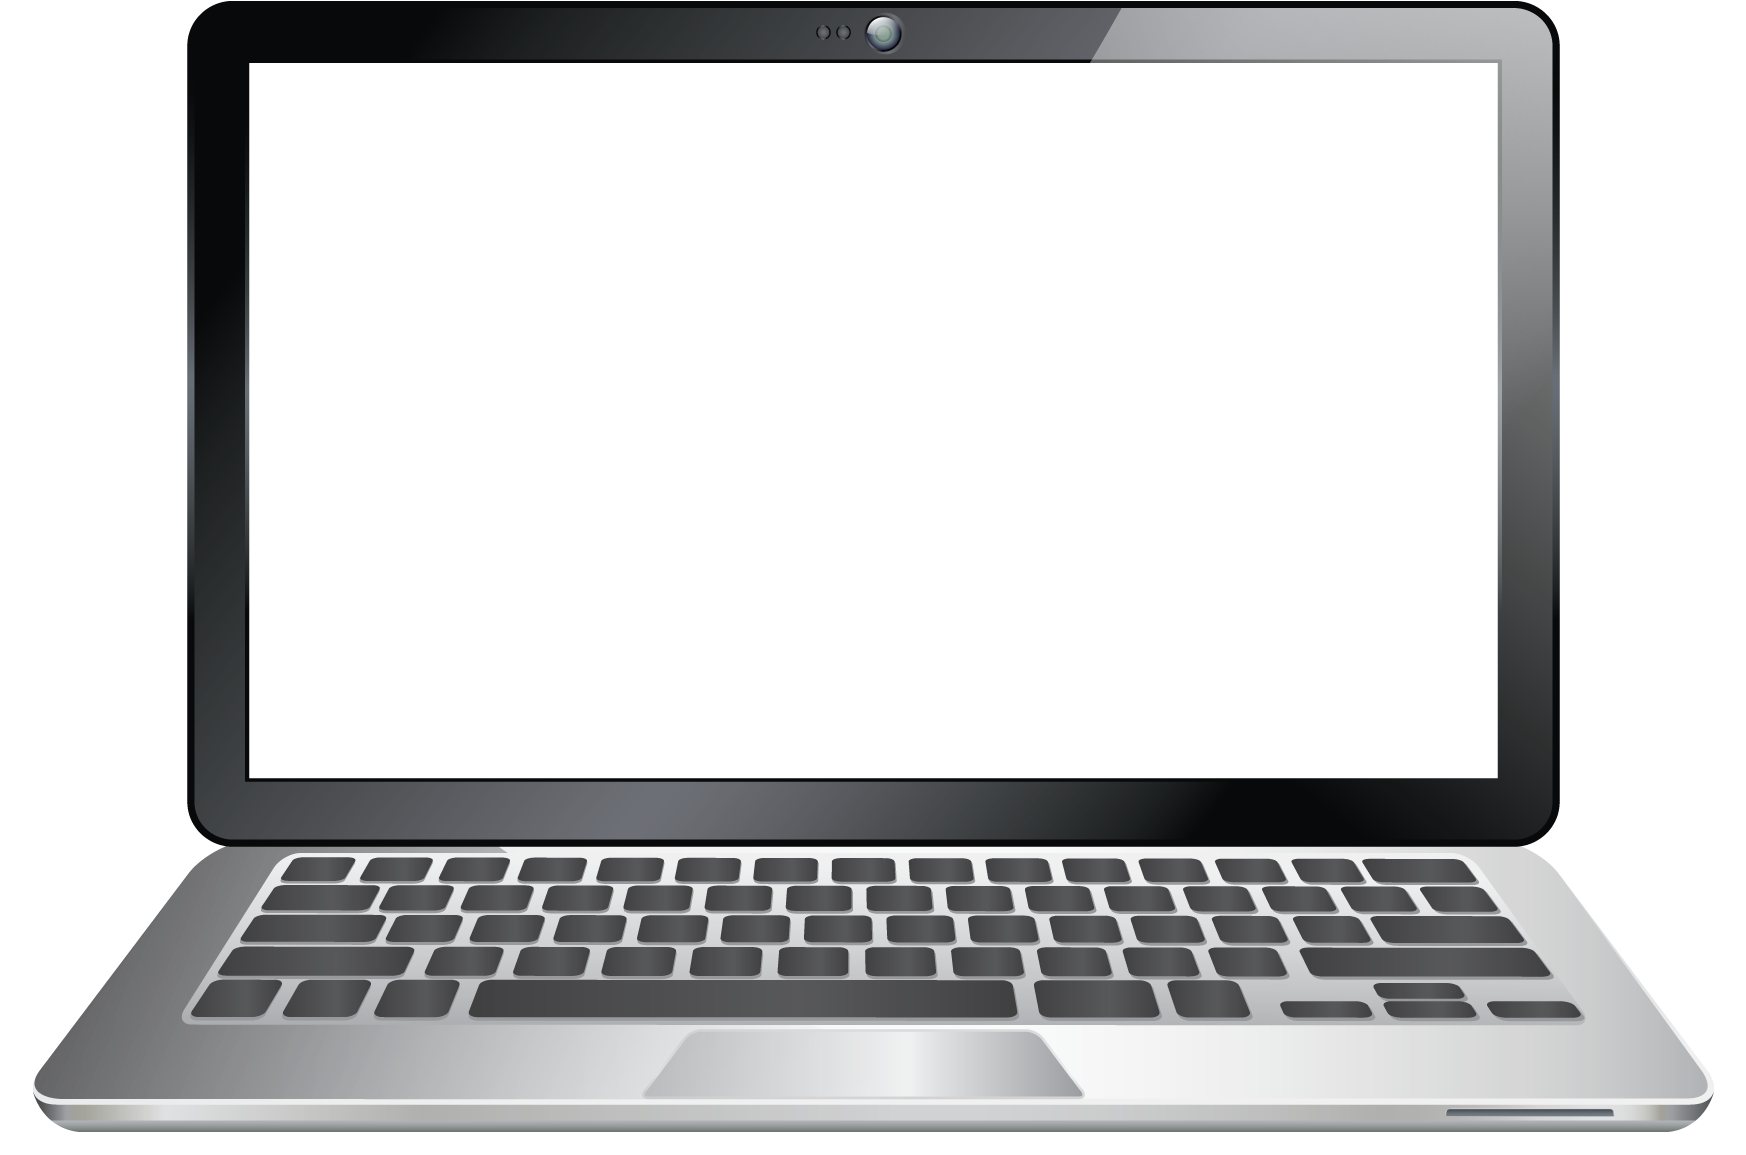 Картинка на монитор ноутбука. Ноутбук. Экран ноутбука. Ноутбук с прозрачным экраном. Компьютер на белом фоне.